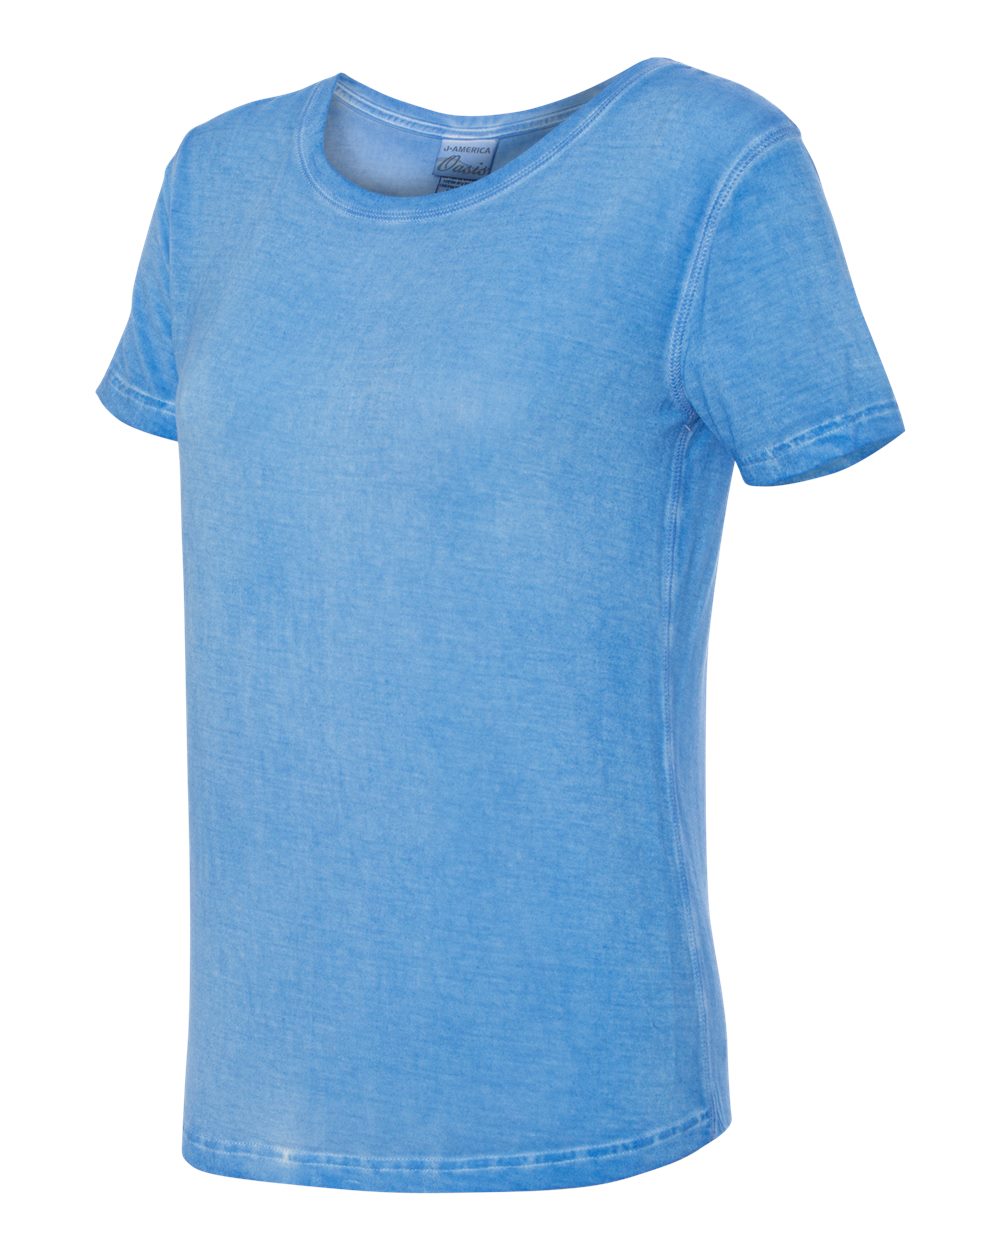 J.America 8127 - Women's Oasis Wash Drop Tail T-Shirt